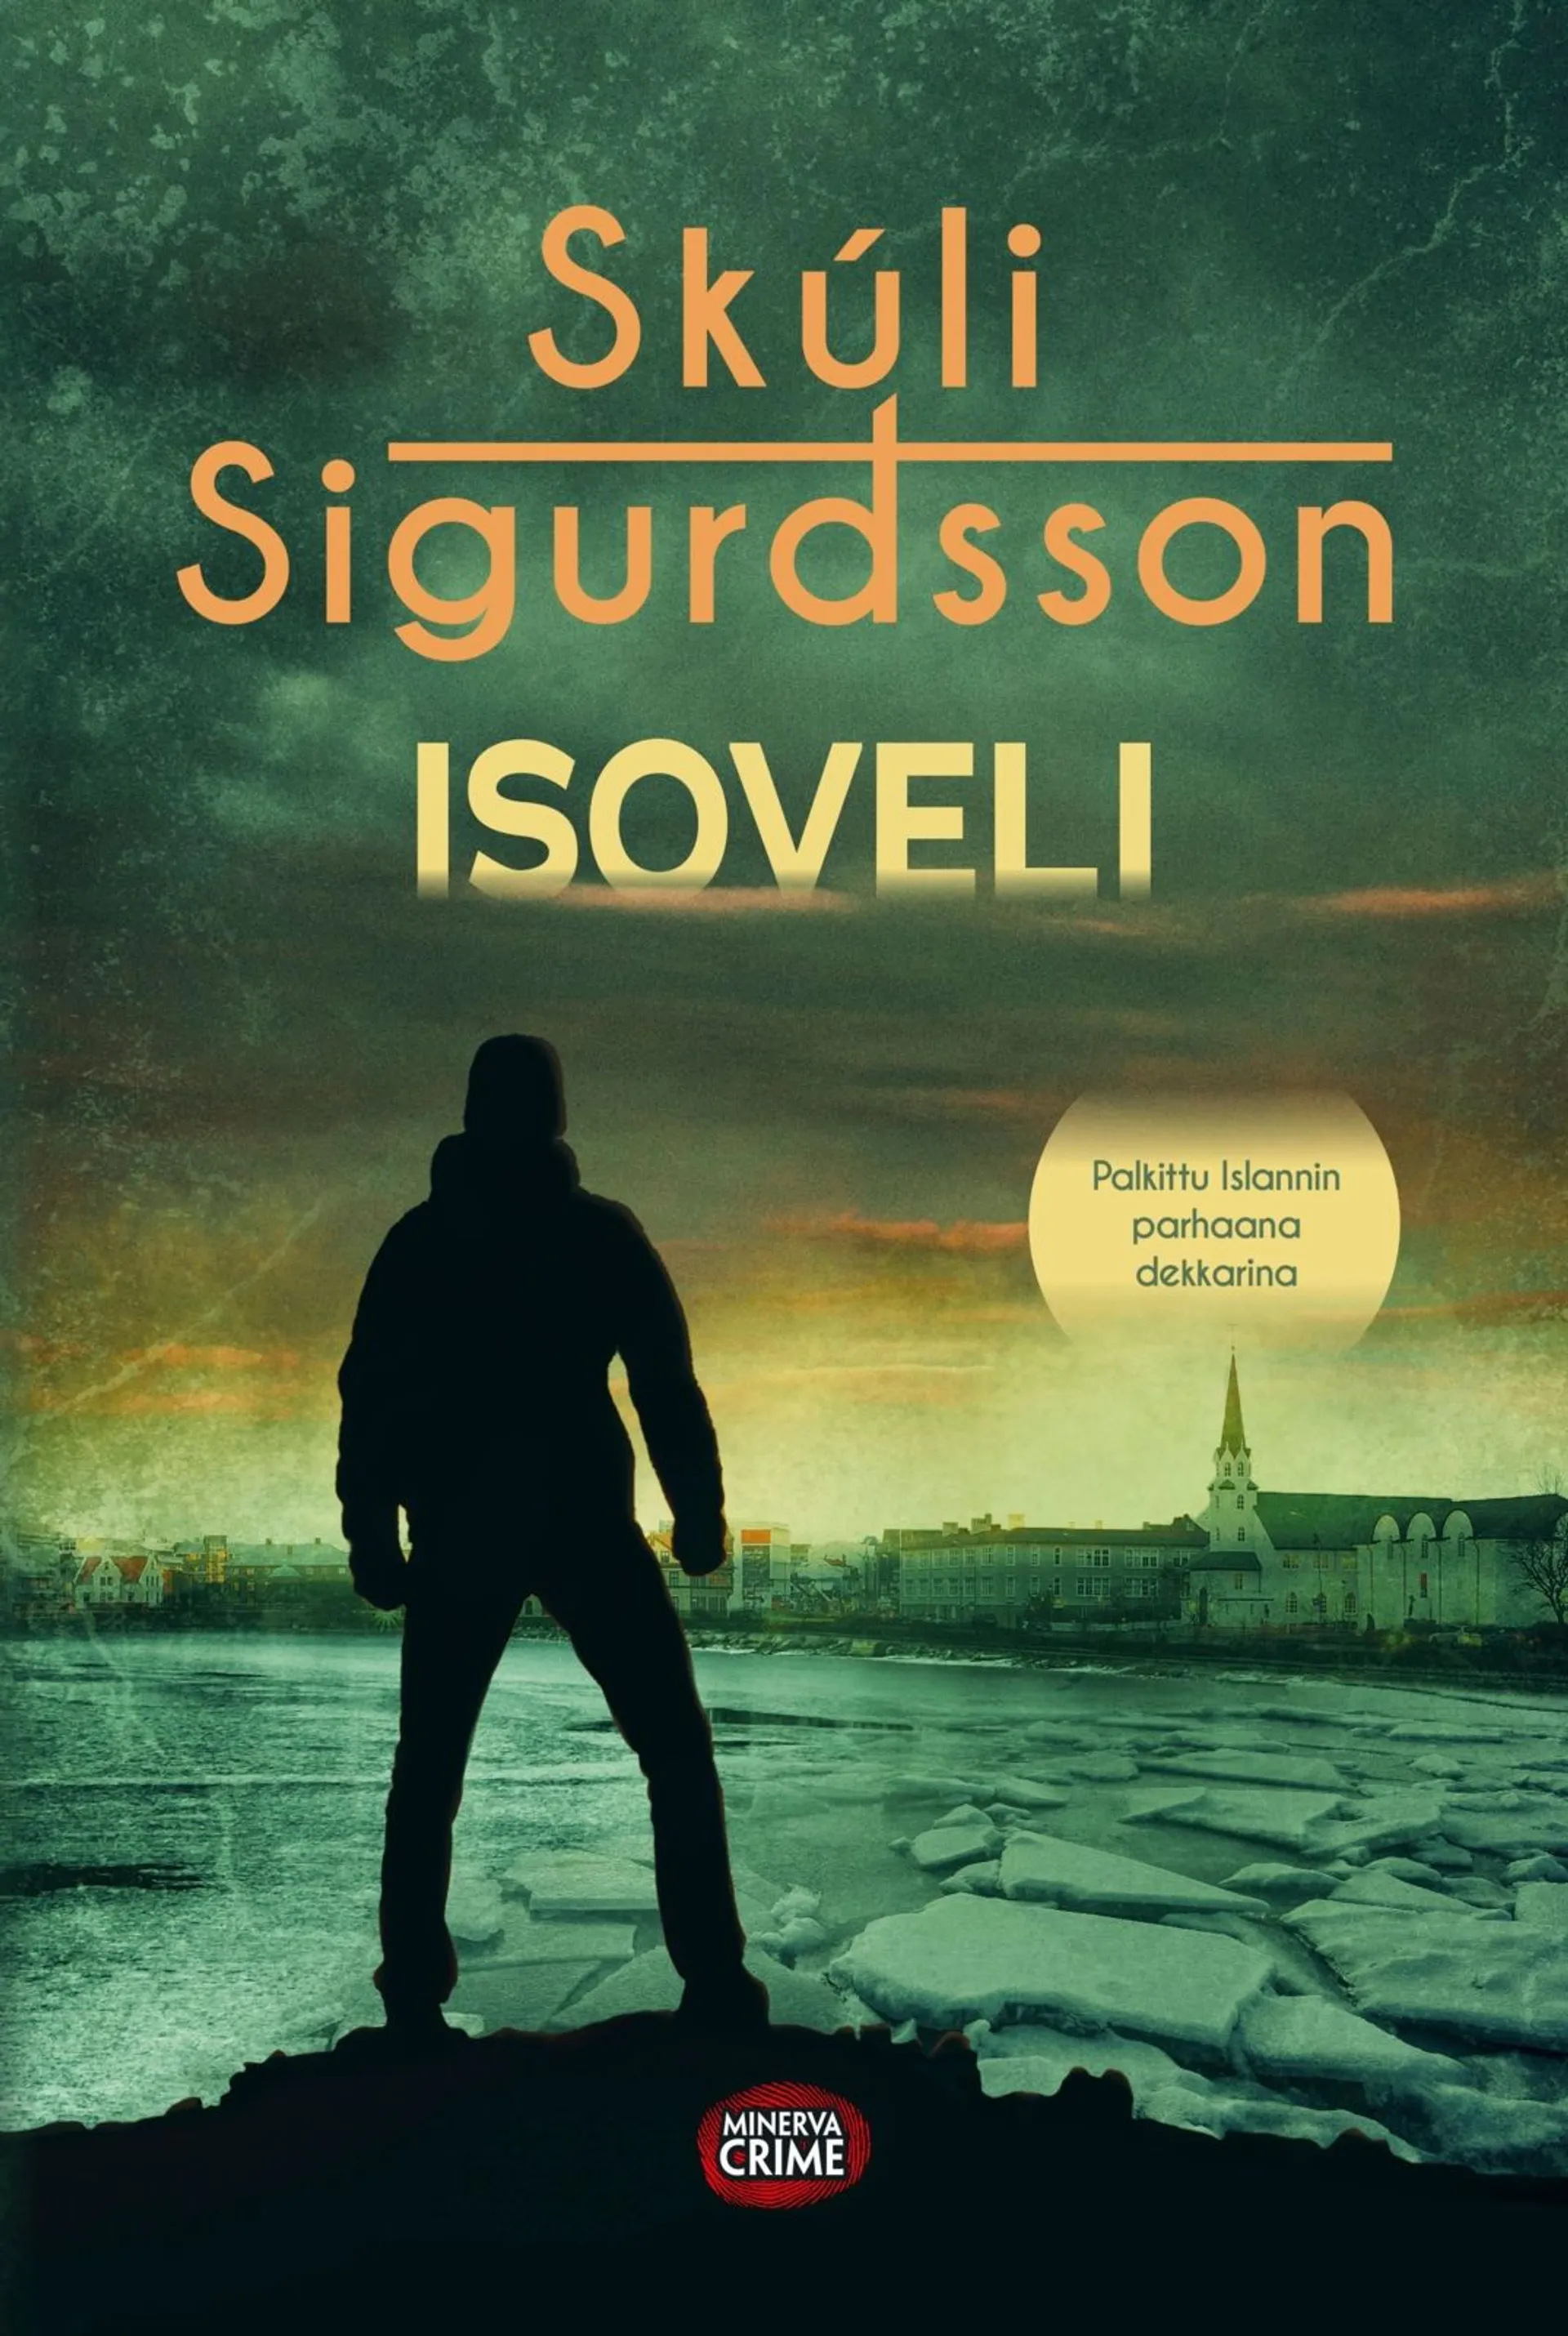 Sigurdsson, Isoveli